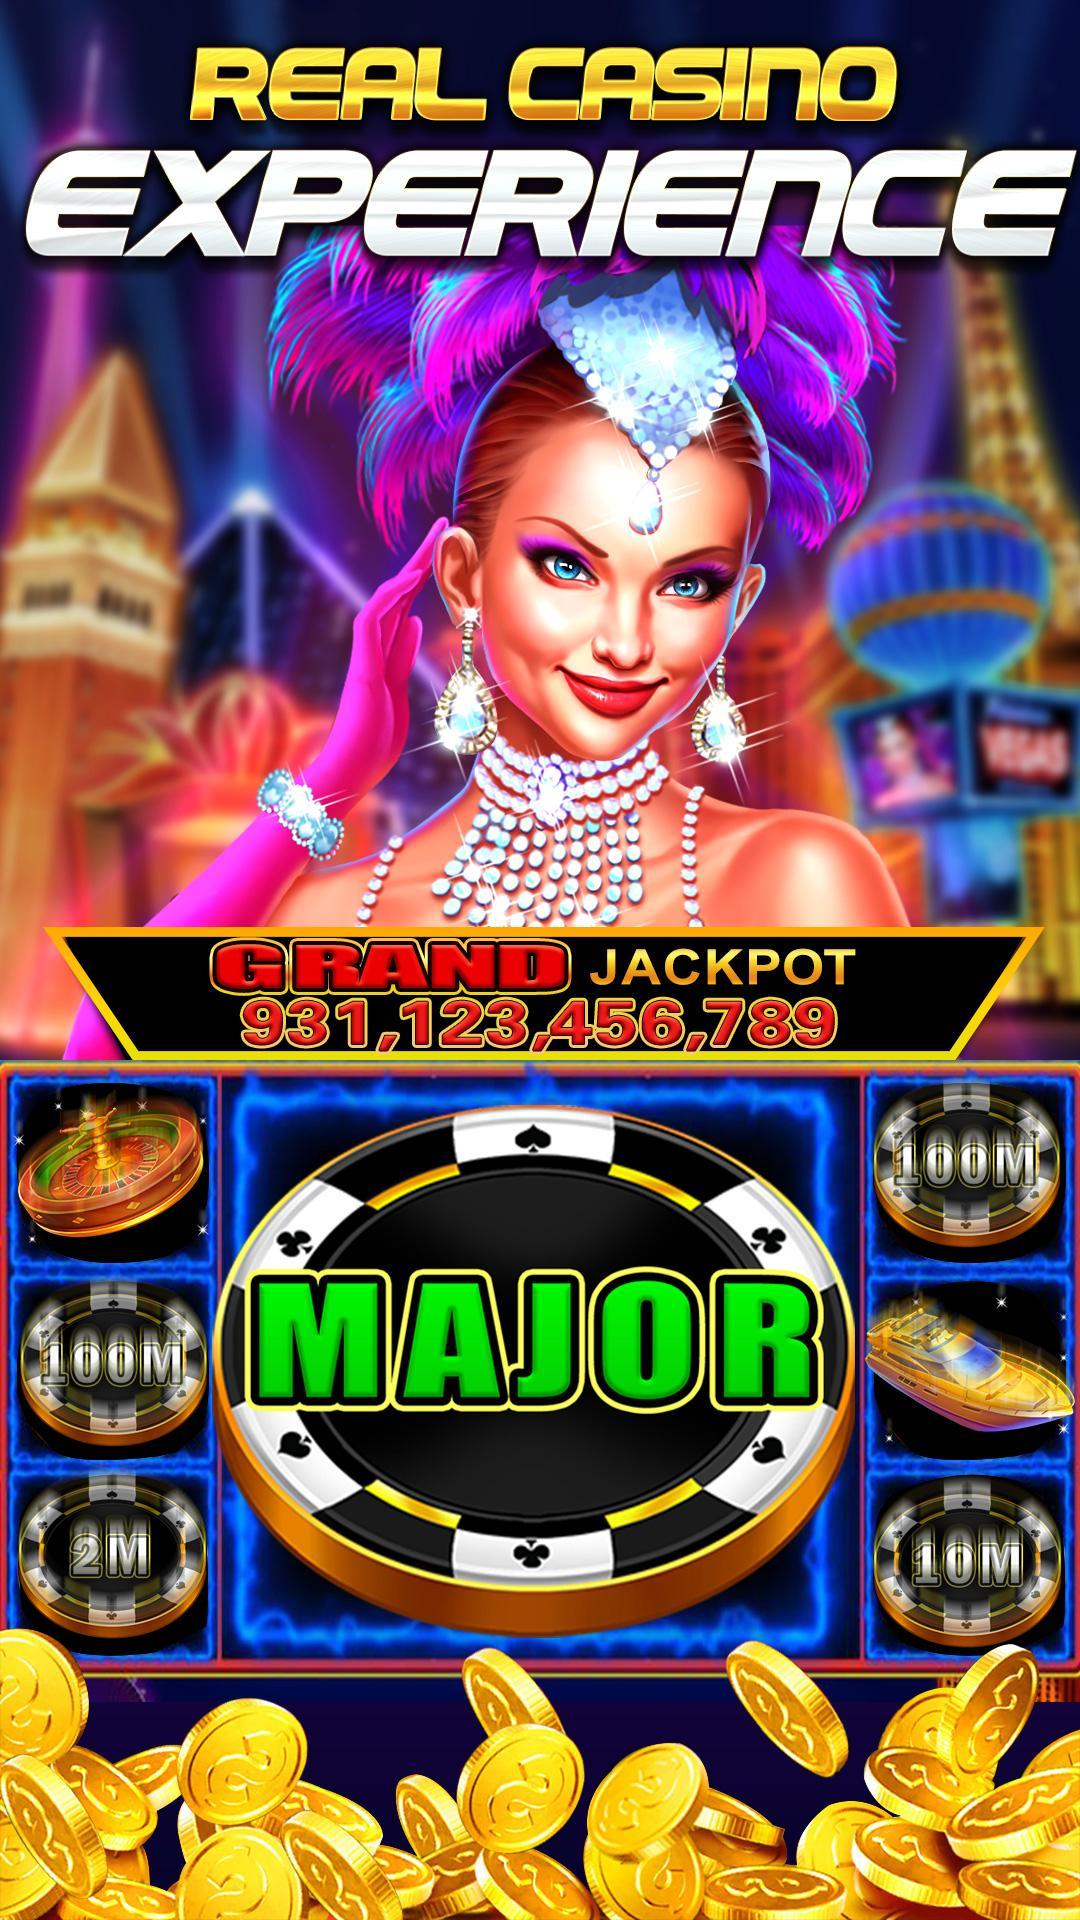 Doubledown casino free slots home Best betsoft